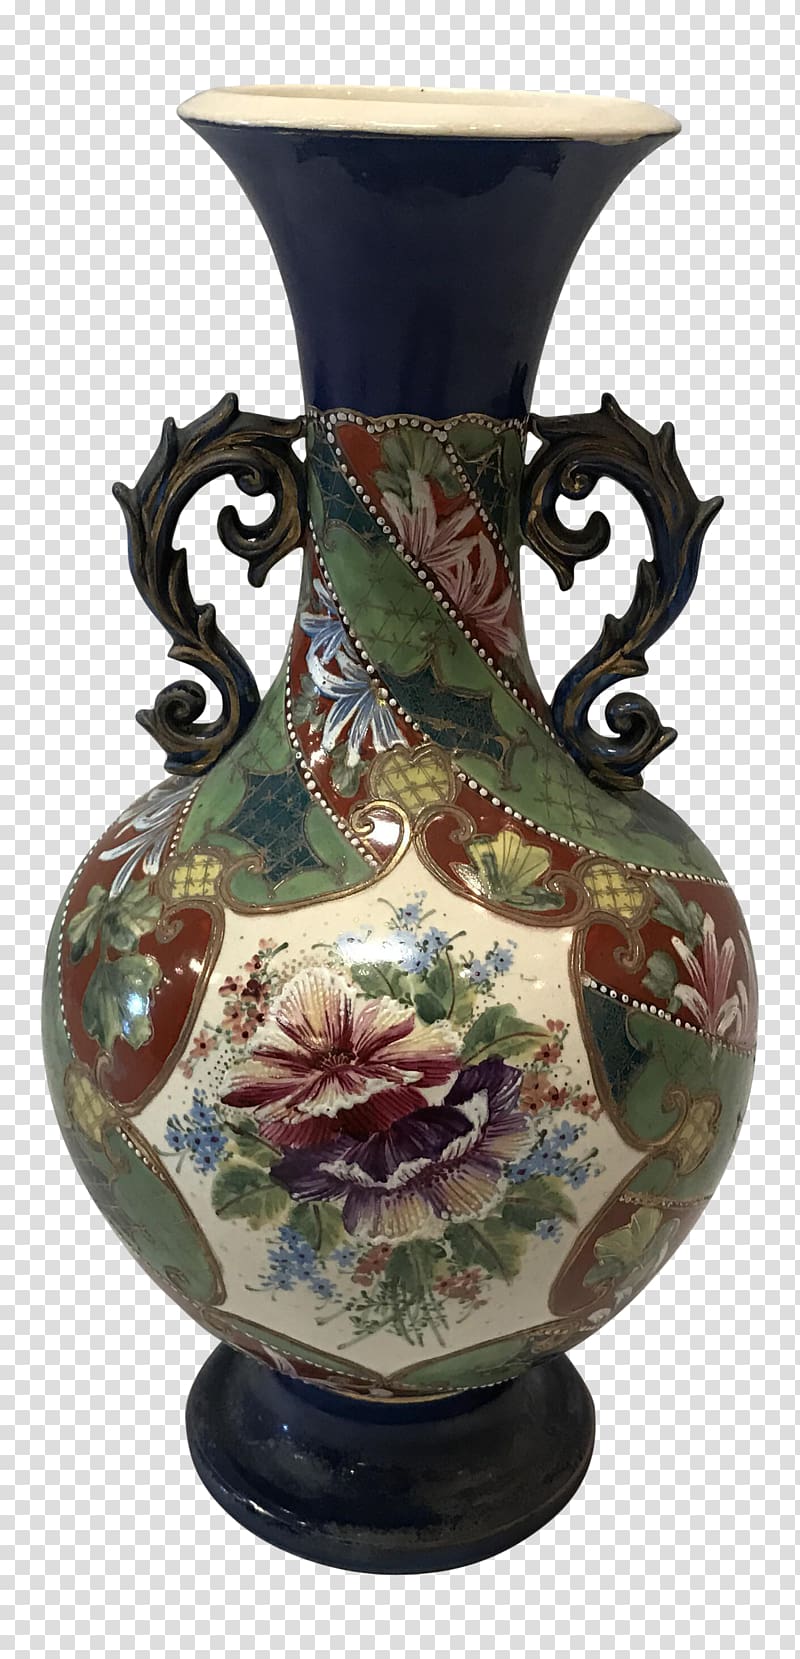 Vase Ceramic Pottery Jug Decorative arts, vase transparent background PNG clipart